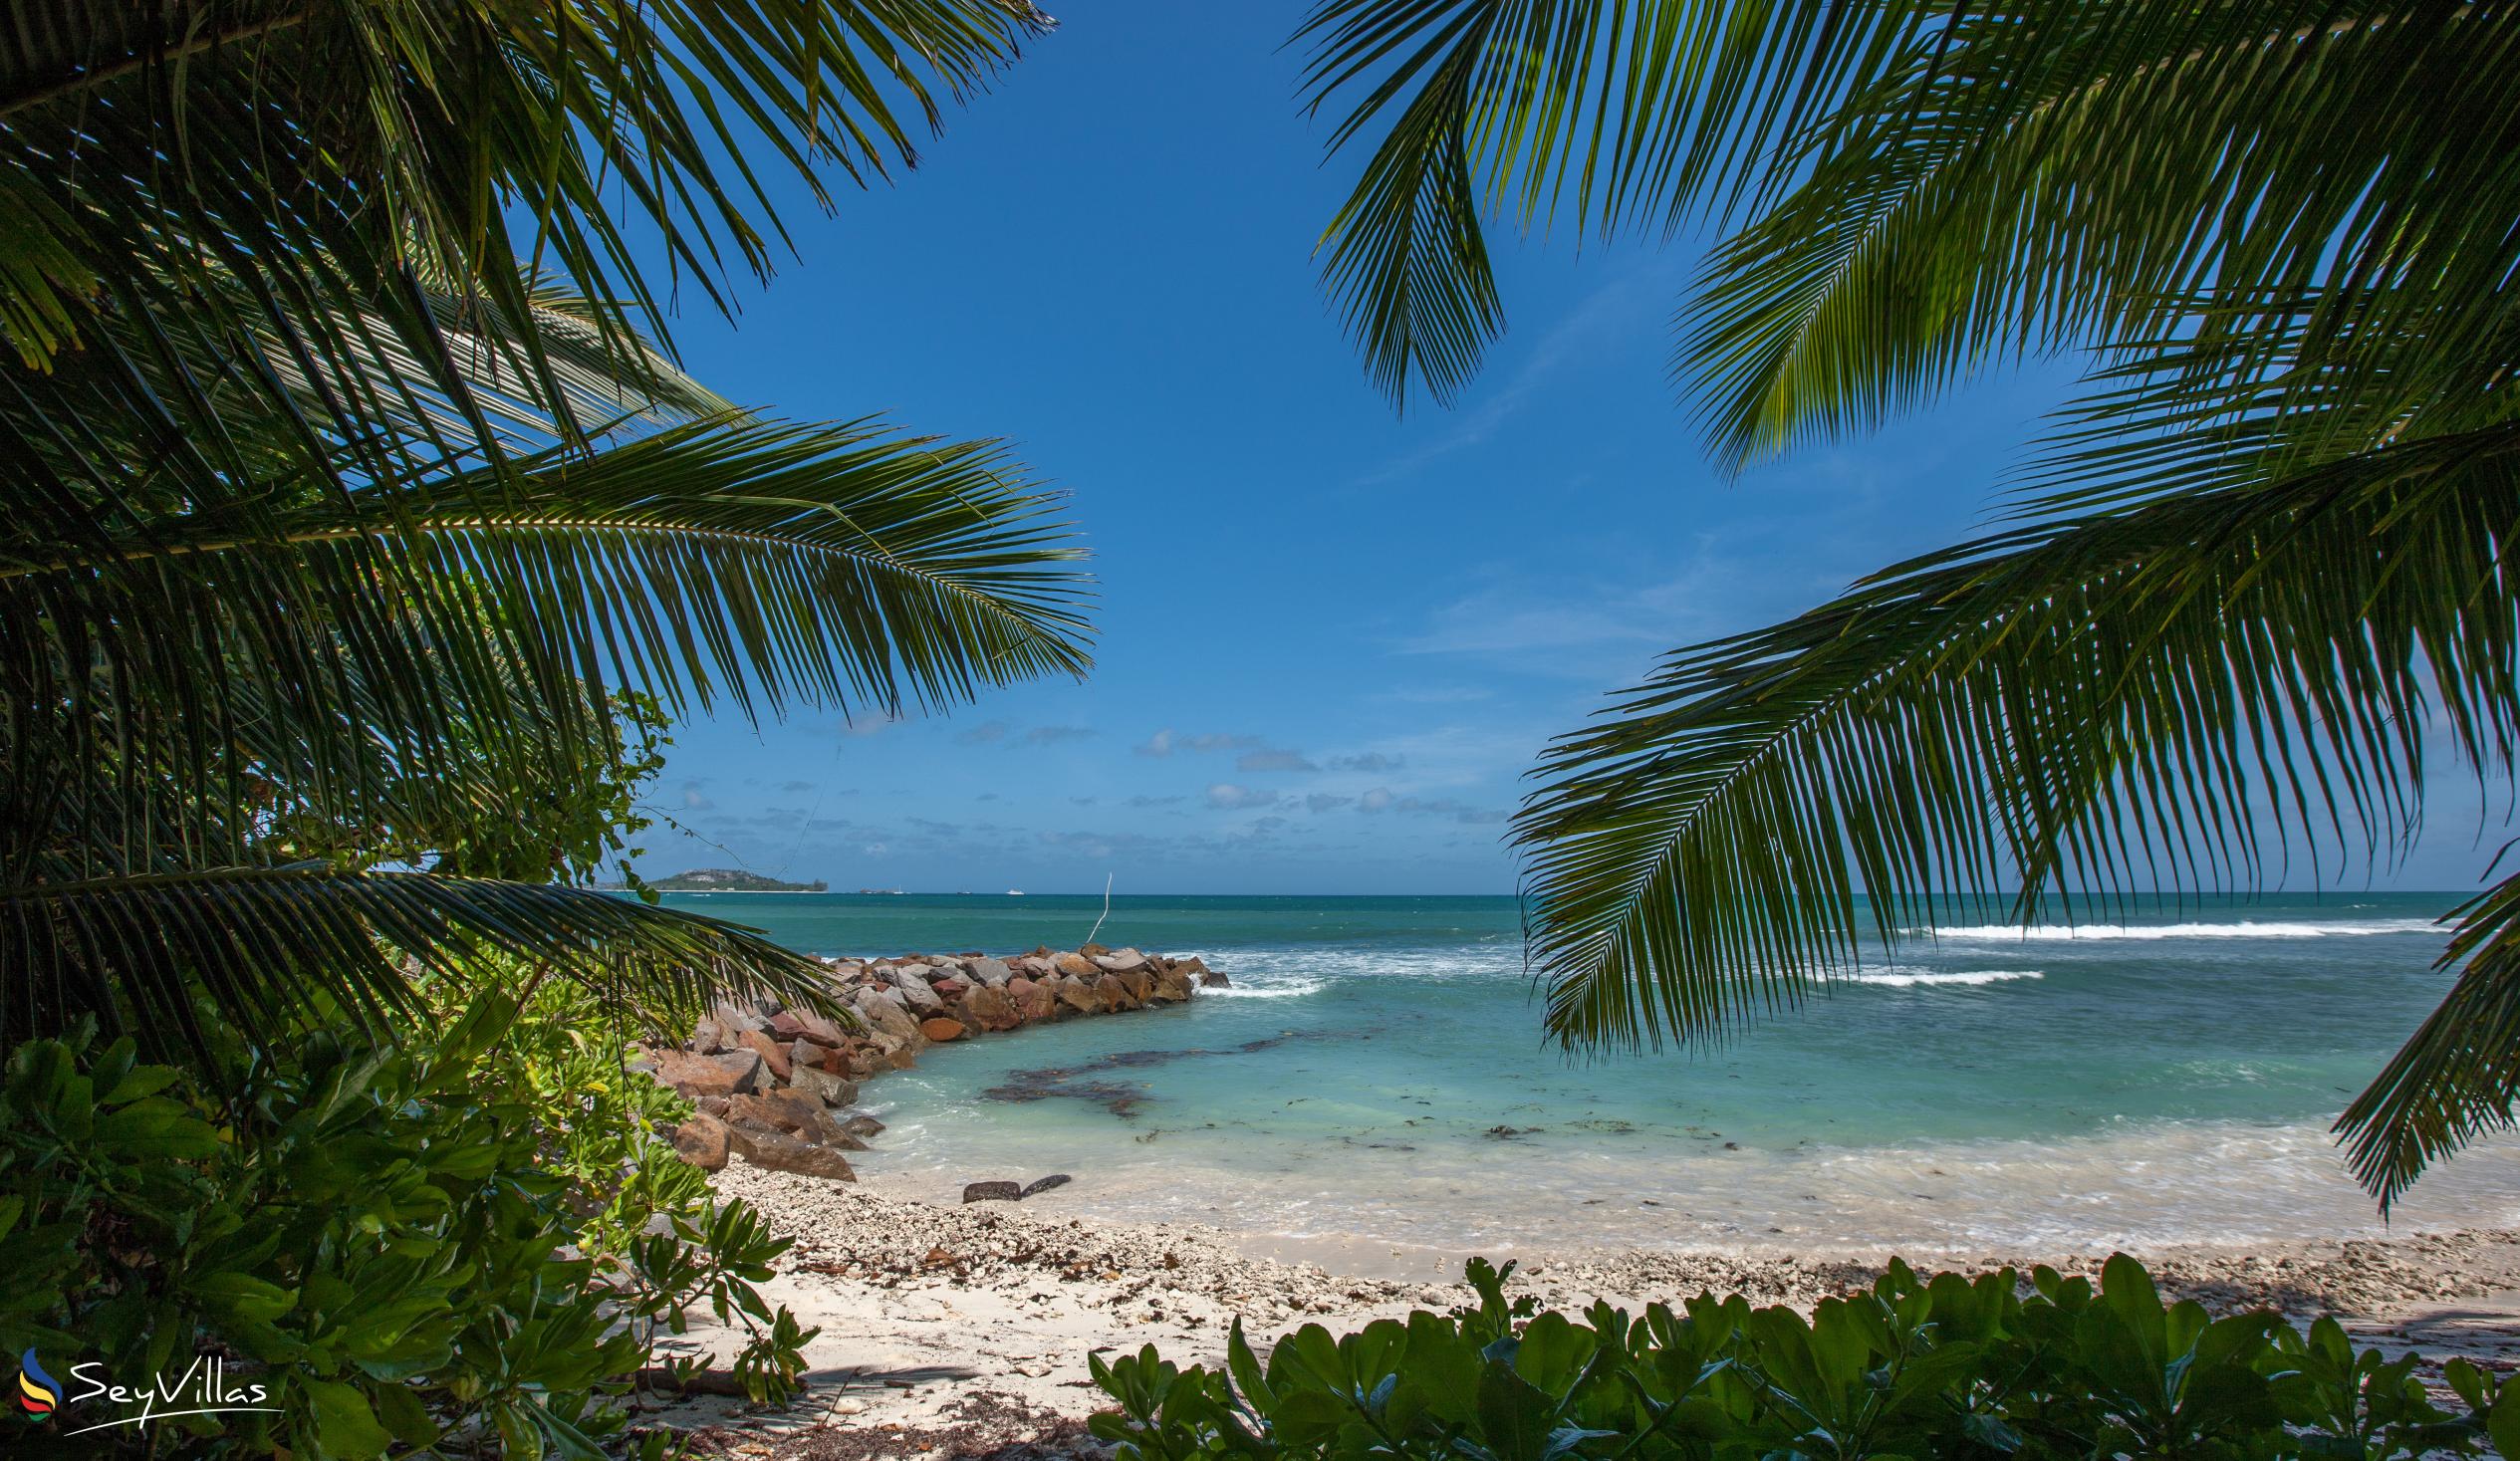 Photo 49: Villas de Mer - Beaches - Praslin (Seychelles)